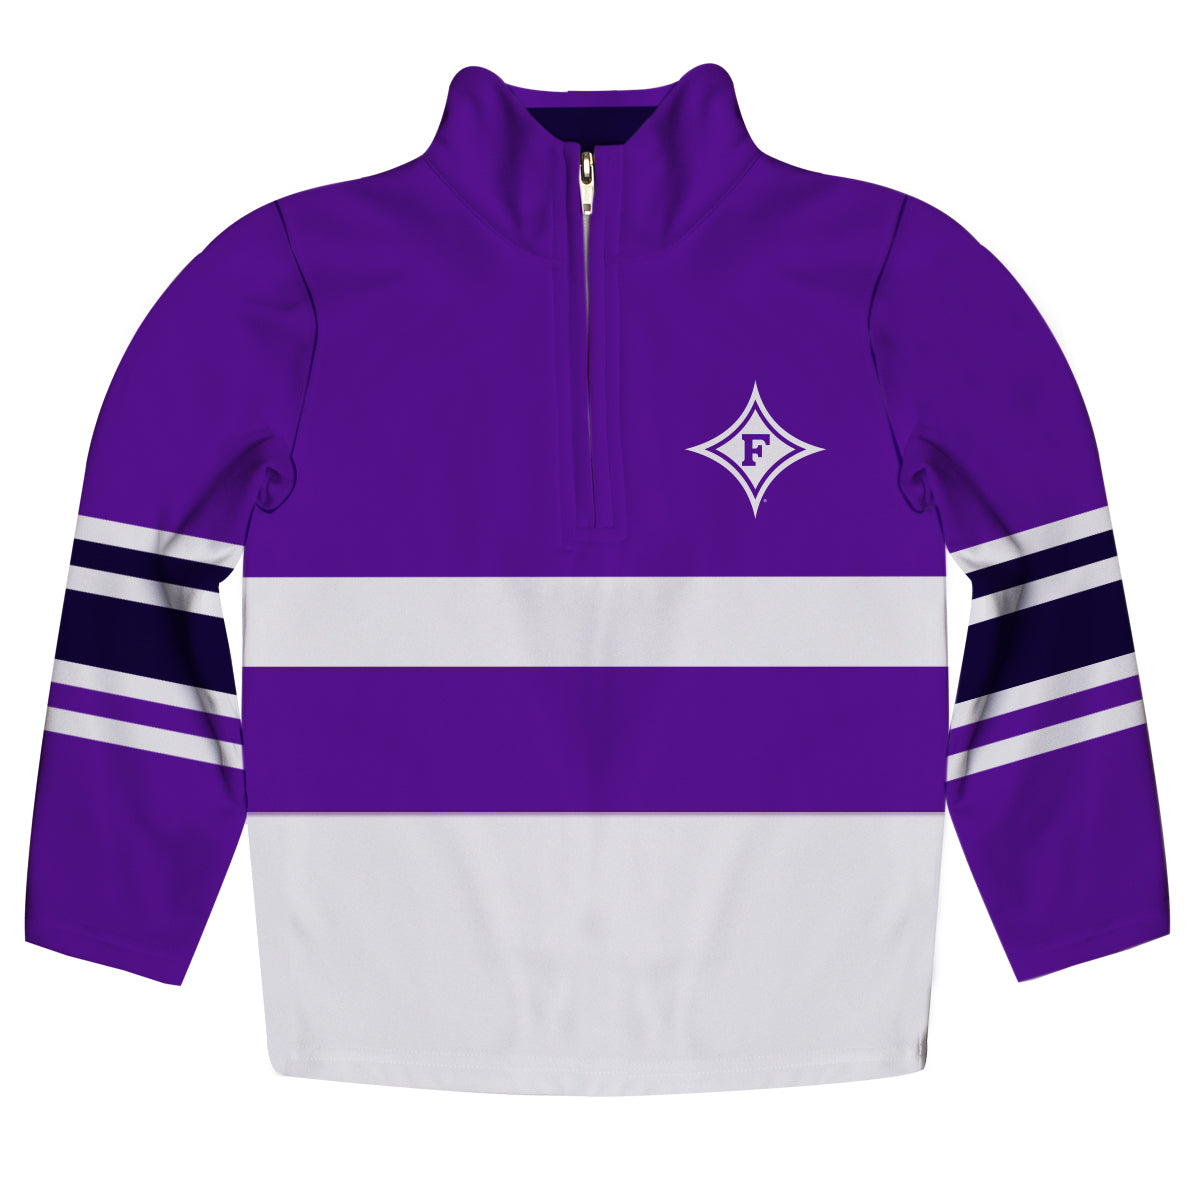 Furman Paladins Logo Stripes Purple Long Sleeve Quarter Zip Sweatshirt by Vive La Fete